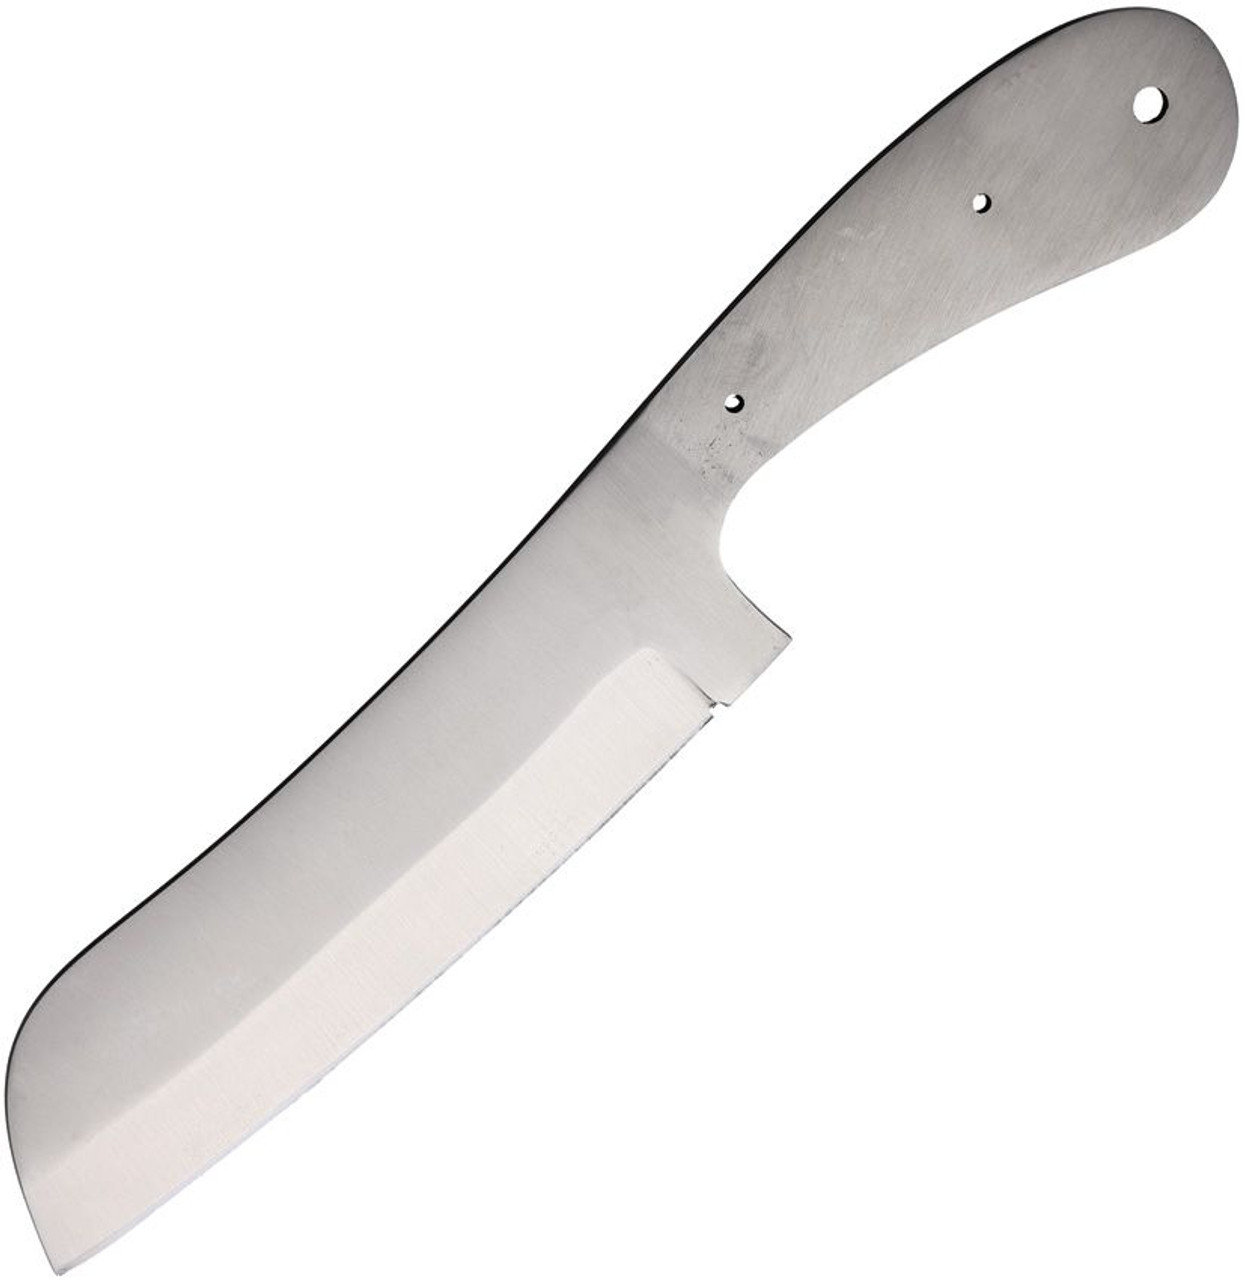 Knife Blade Wharncliffe Knife Blank (BL158) 7" Stainless Steel Wharncliffe Plain Blade, Full Tang